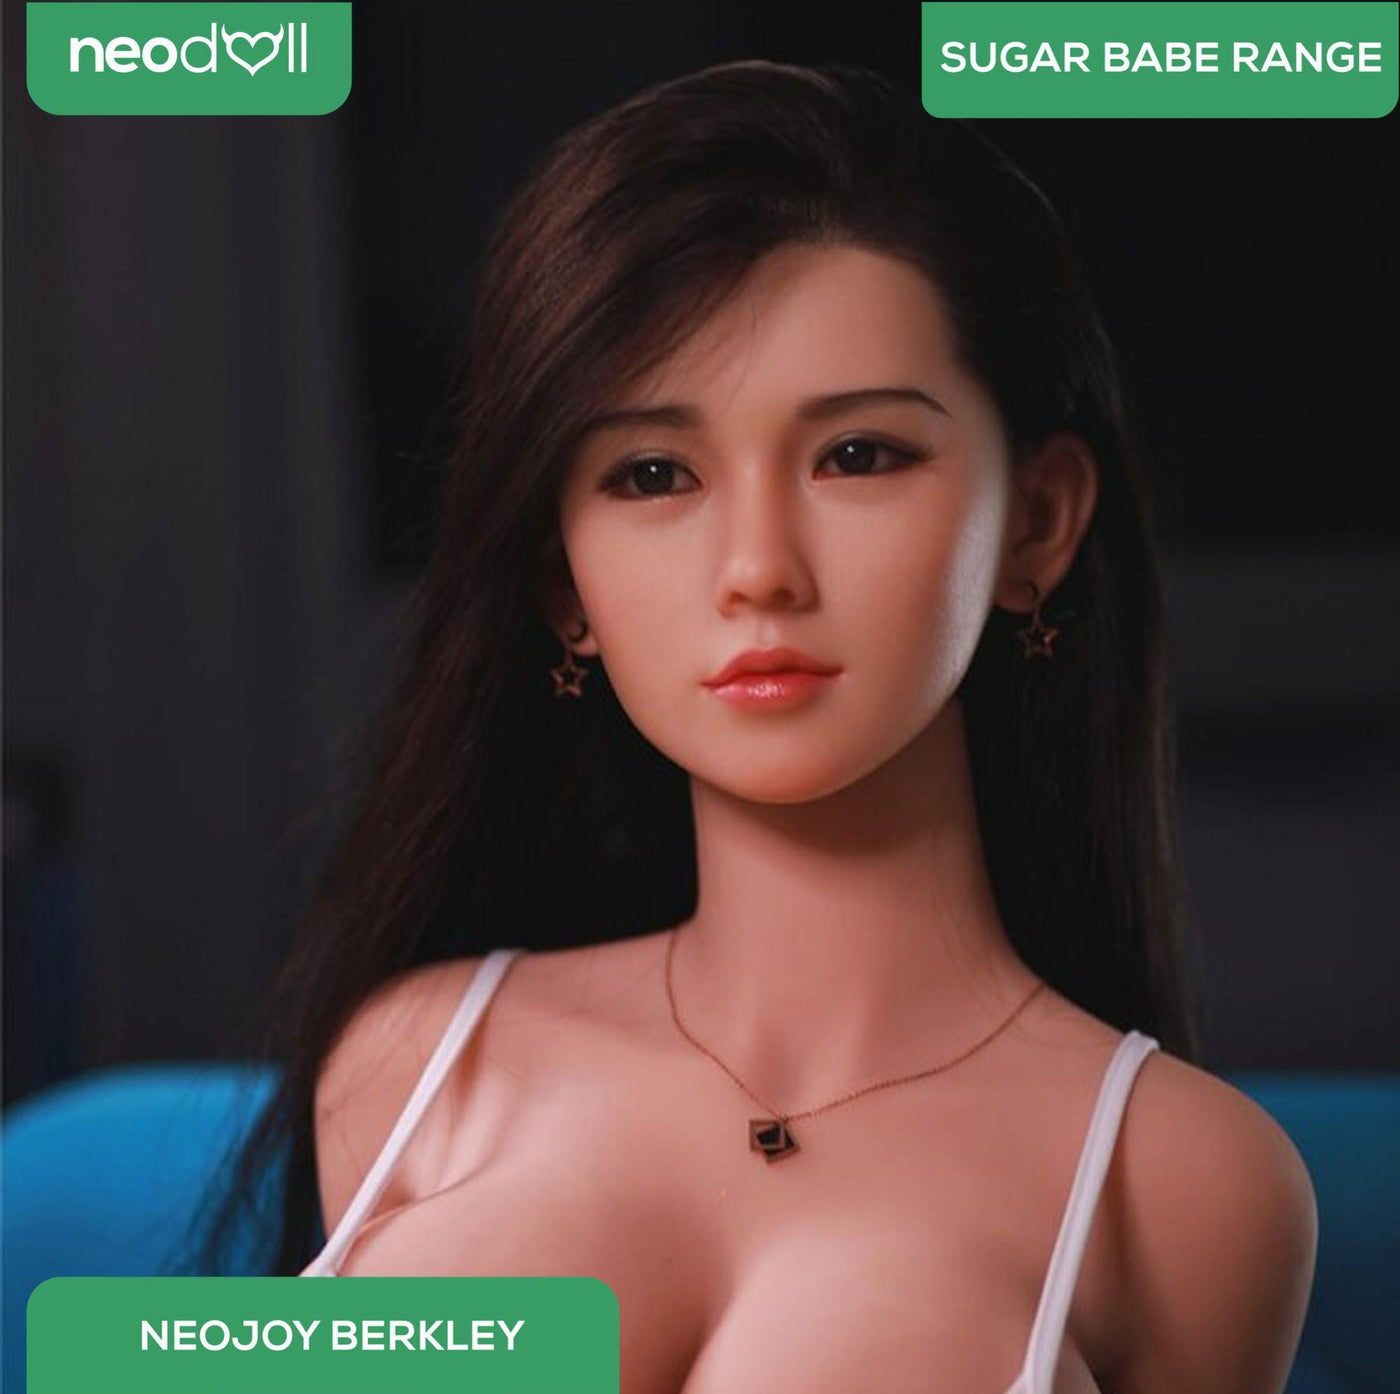 Neodoll Sugar Babe - Berkley - Realistic Sex Doll - Gel Breast - Uterus - 161cm - Natural